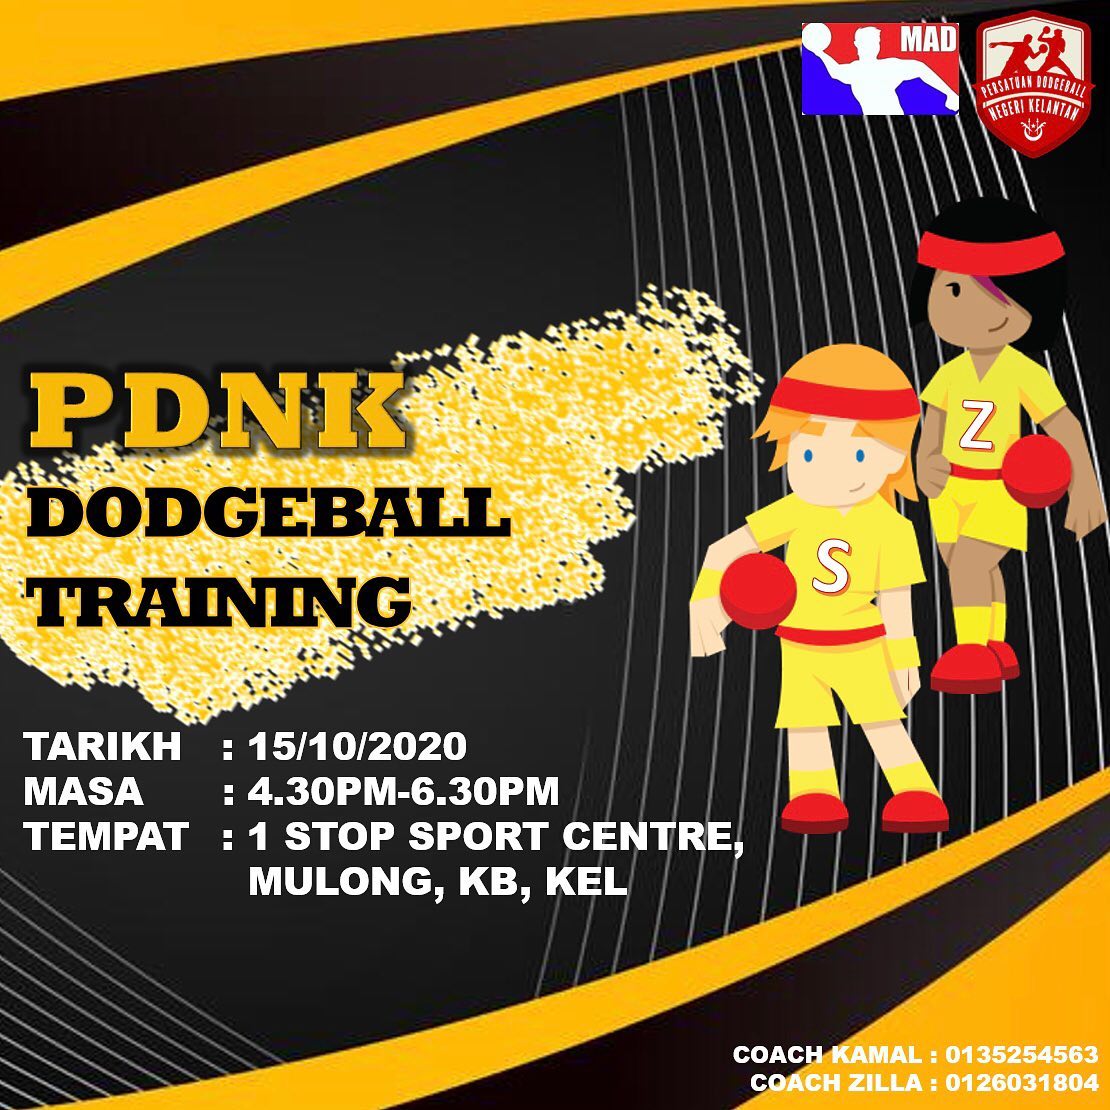 Persatuan Dodgeball Kelantan Dodgeball practice